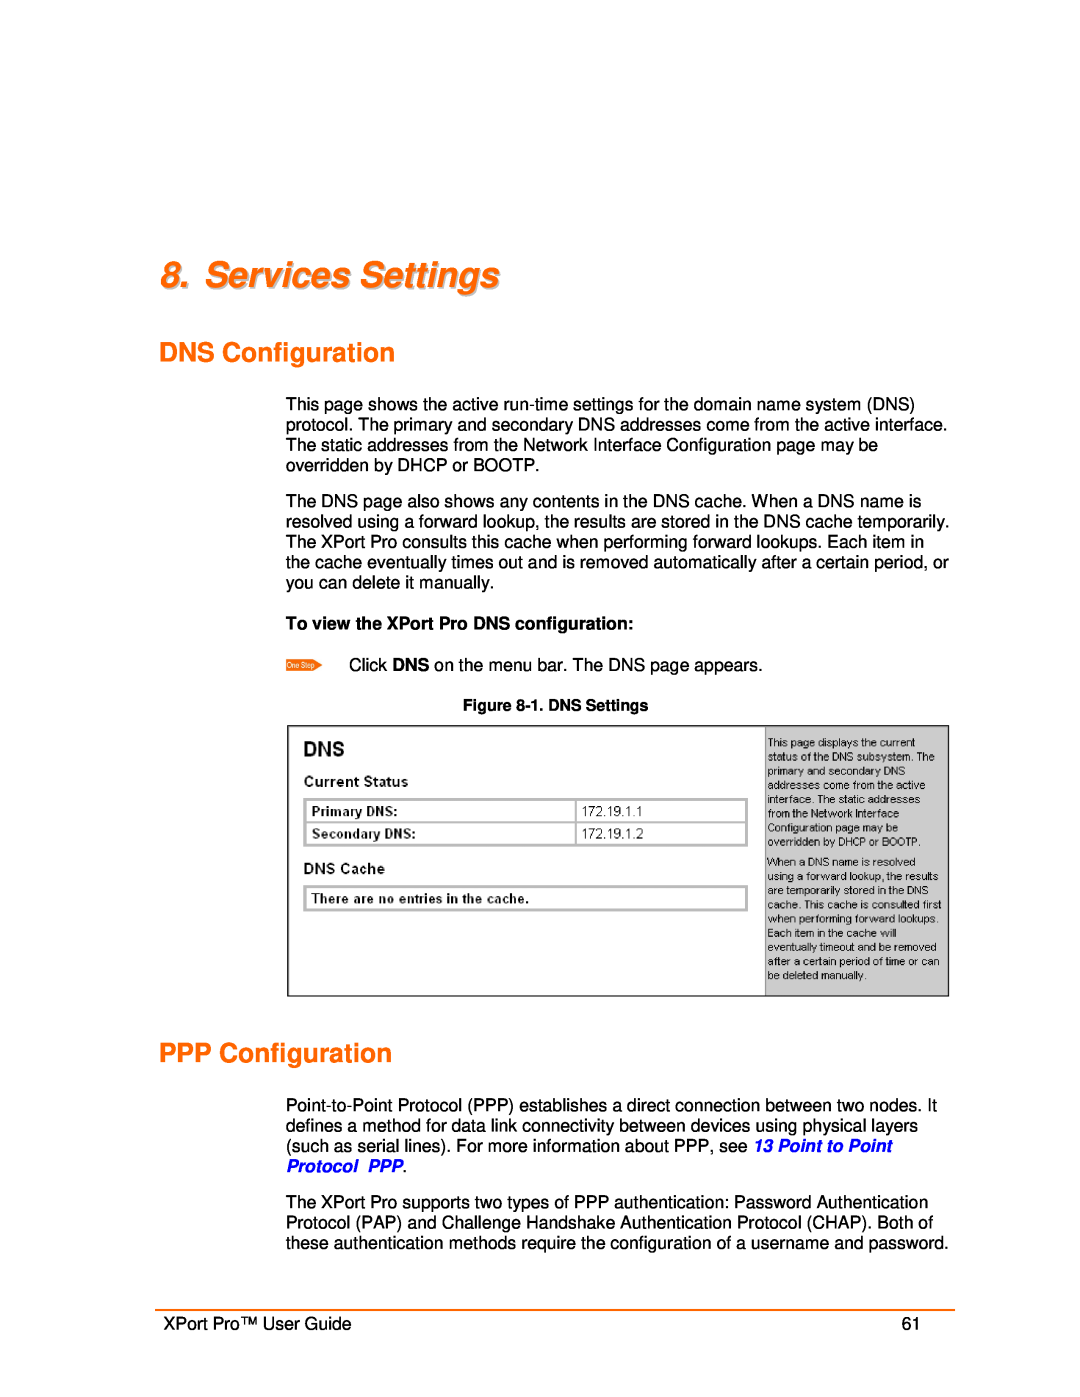 Lantronix 900-560 manual Services Settings, DNS Configuration, PPP Configuration 